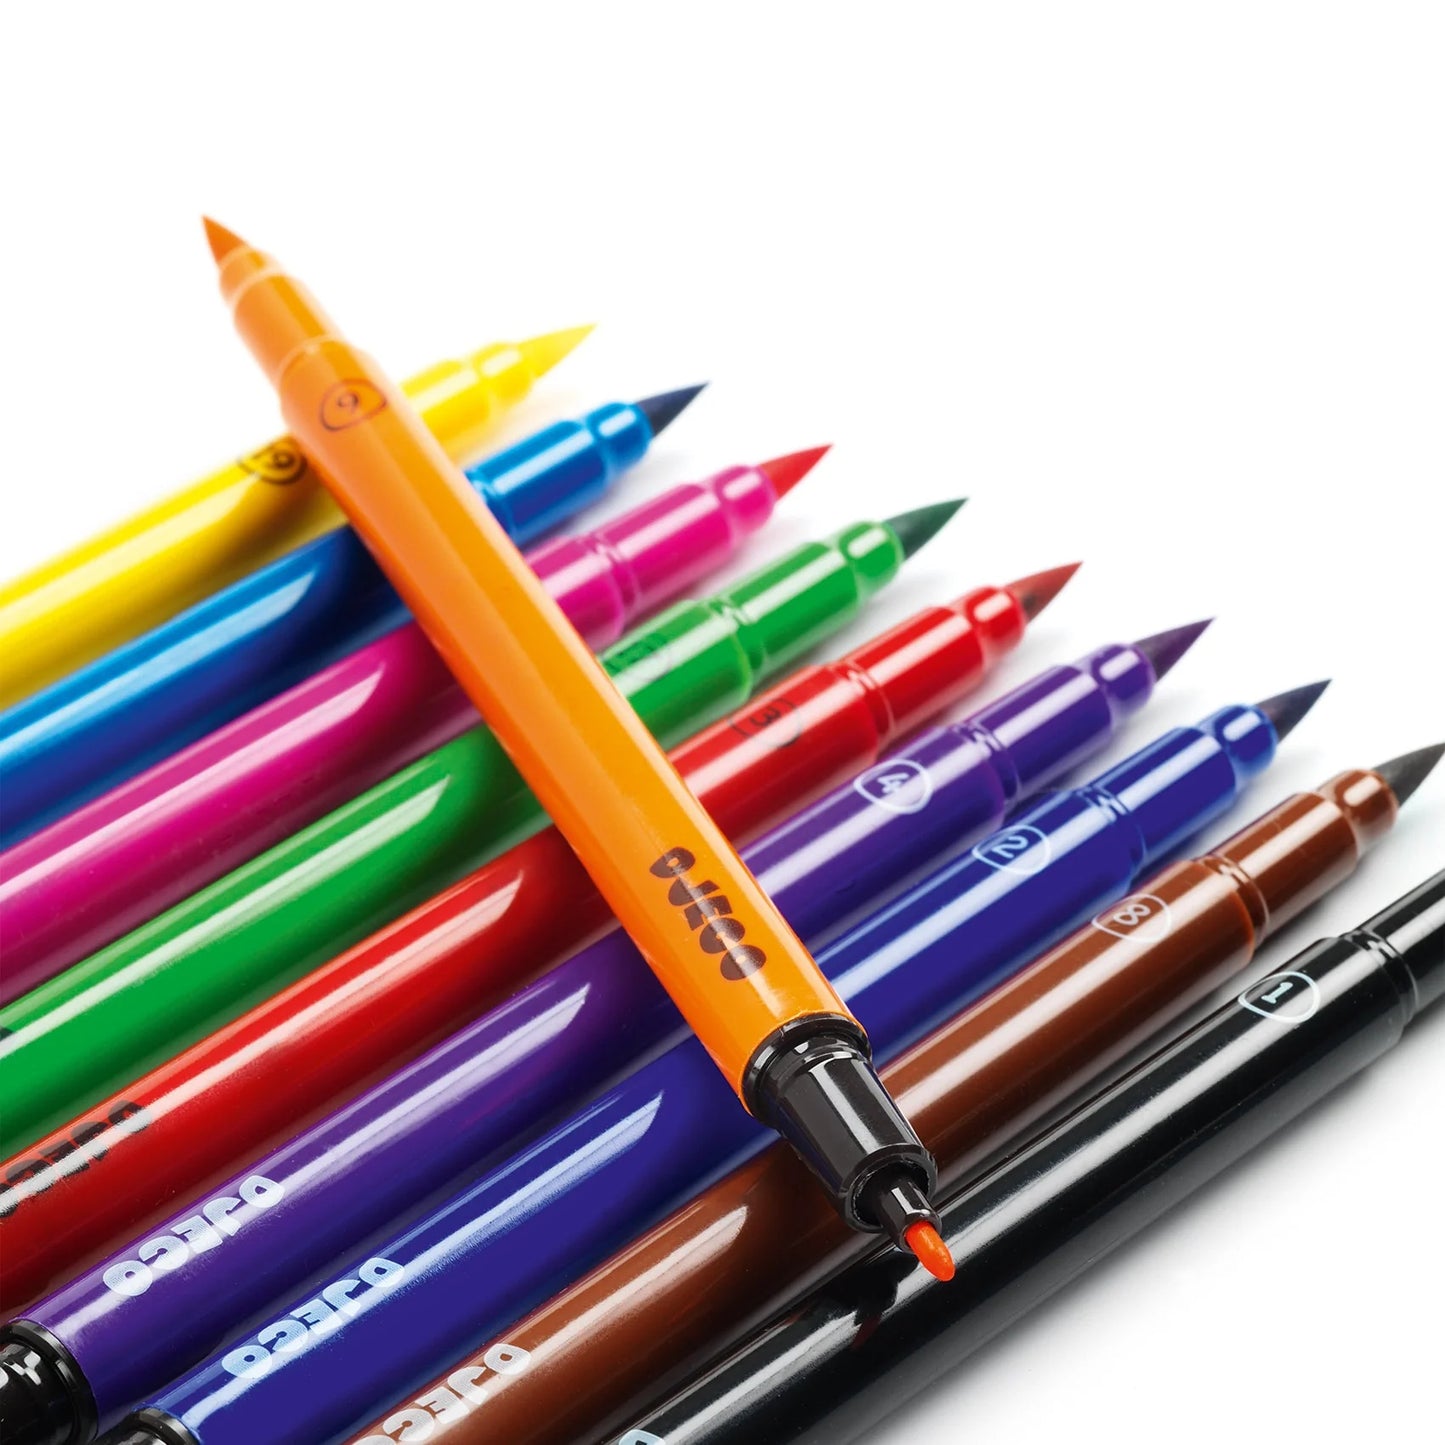 10 Felt Tip Brush Pens | Classic